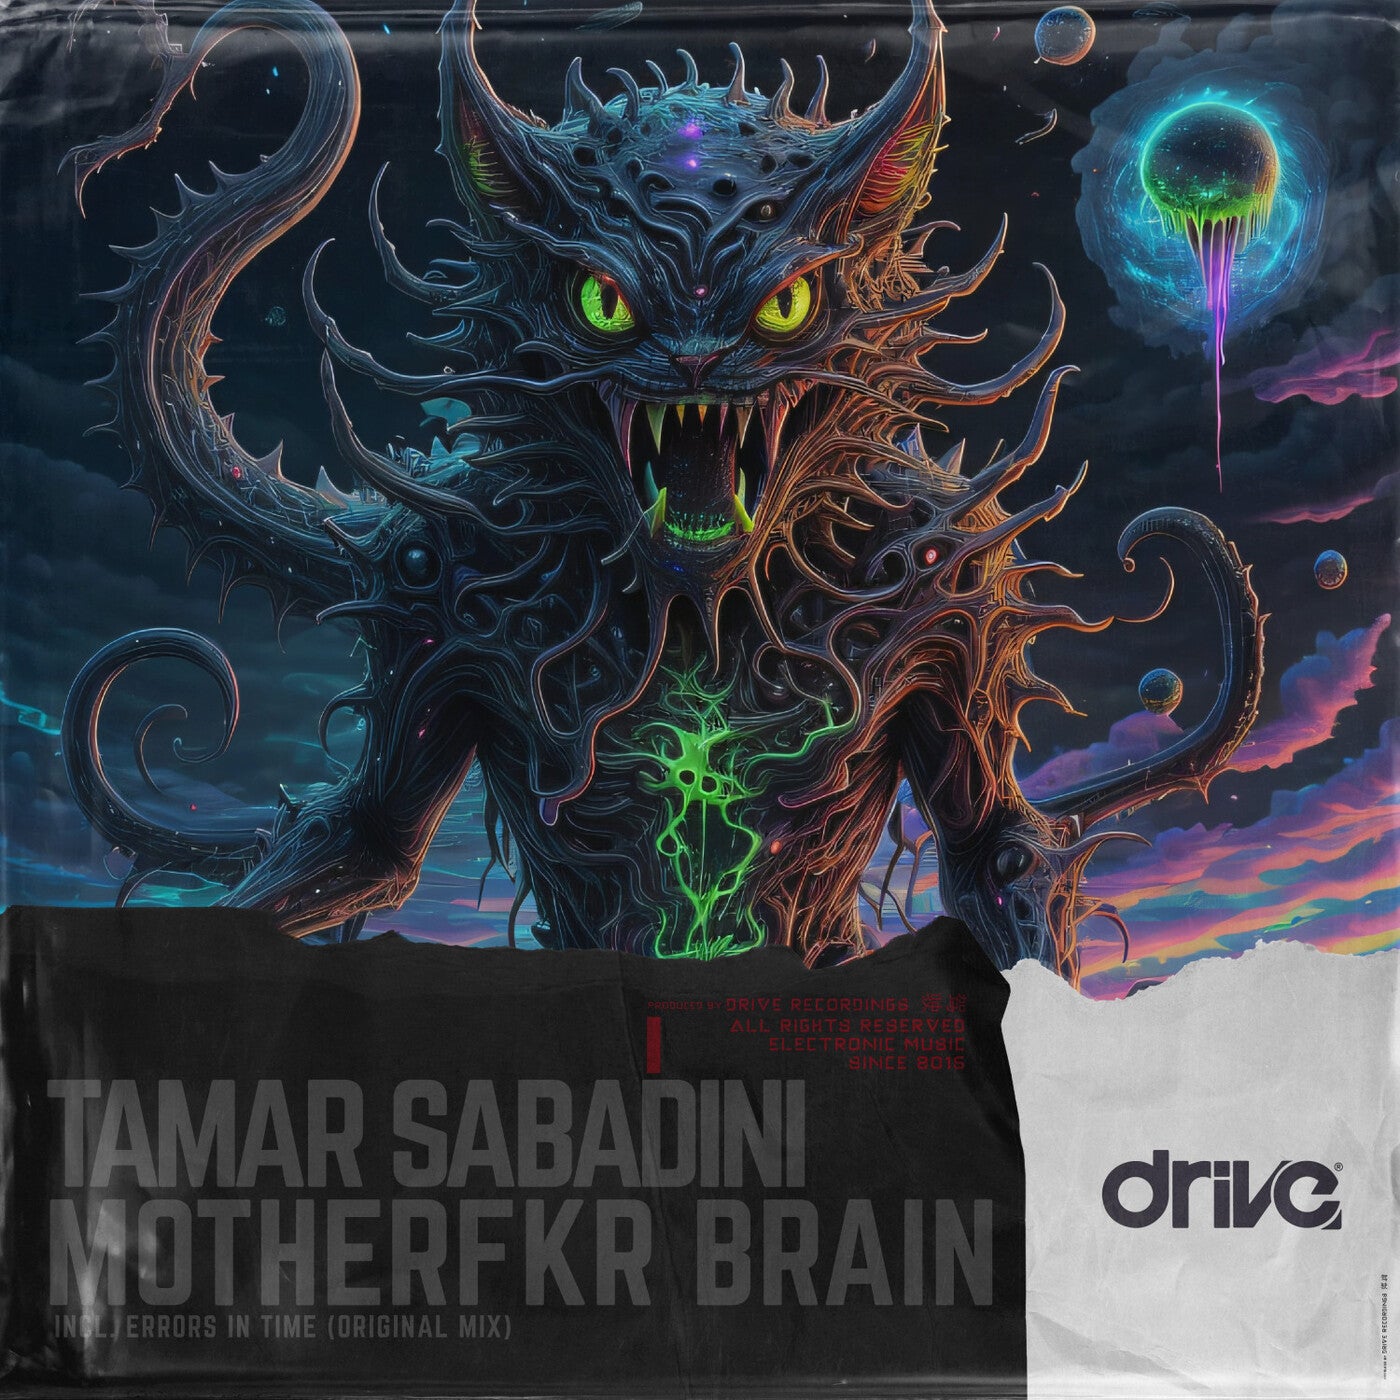 Motherfkr Brain (Original Mix)